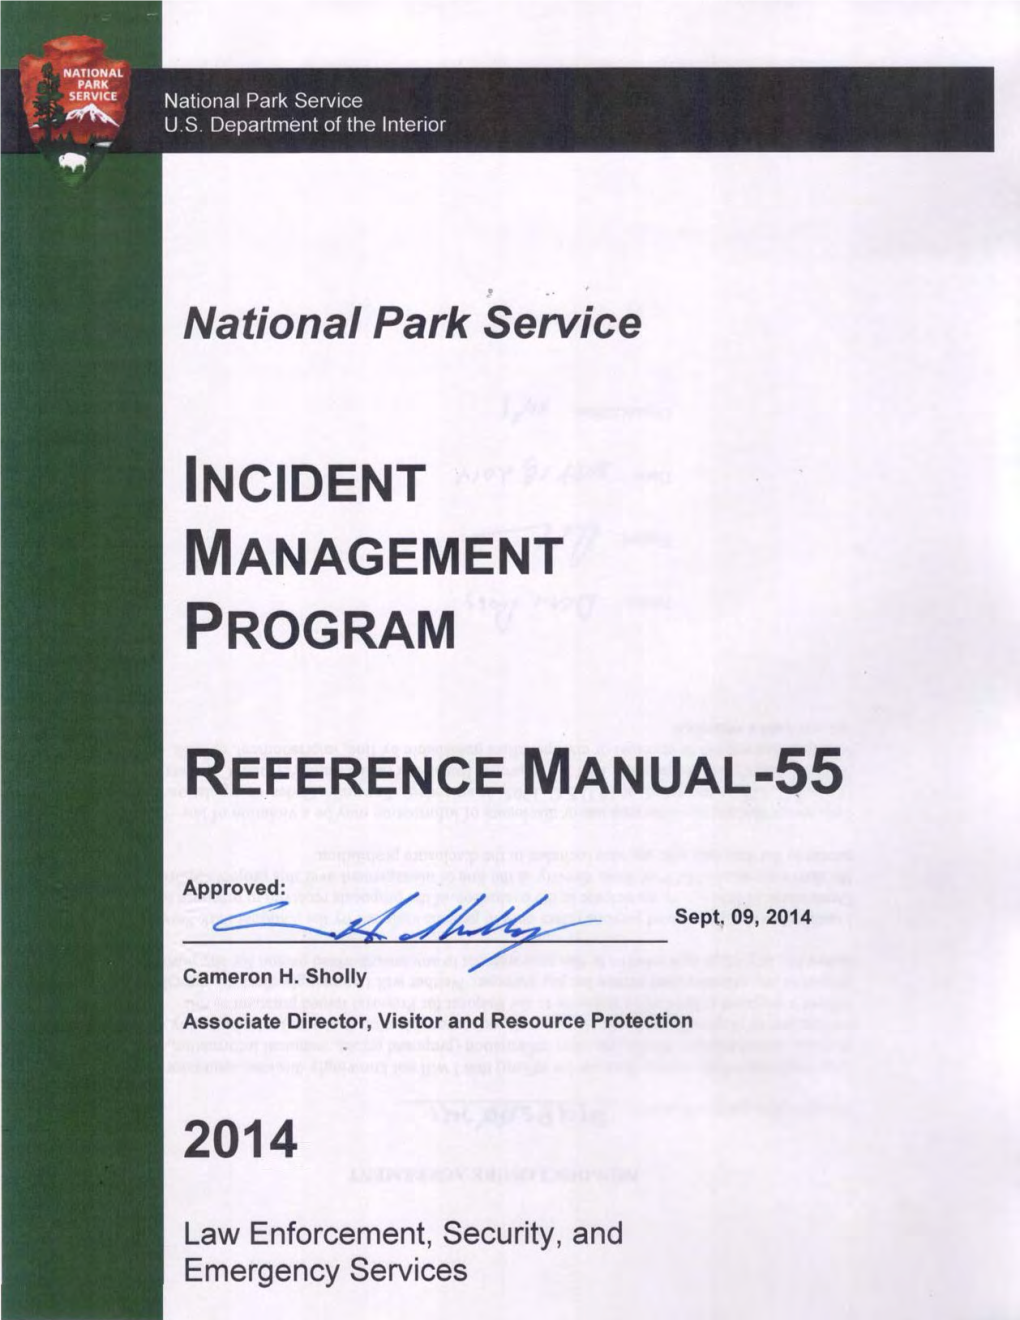 Incident Management Program Page 1